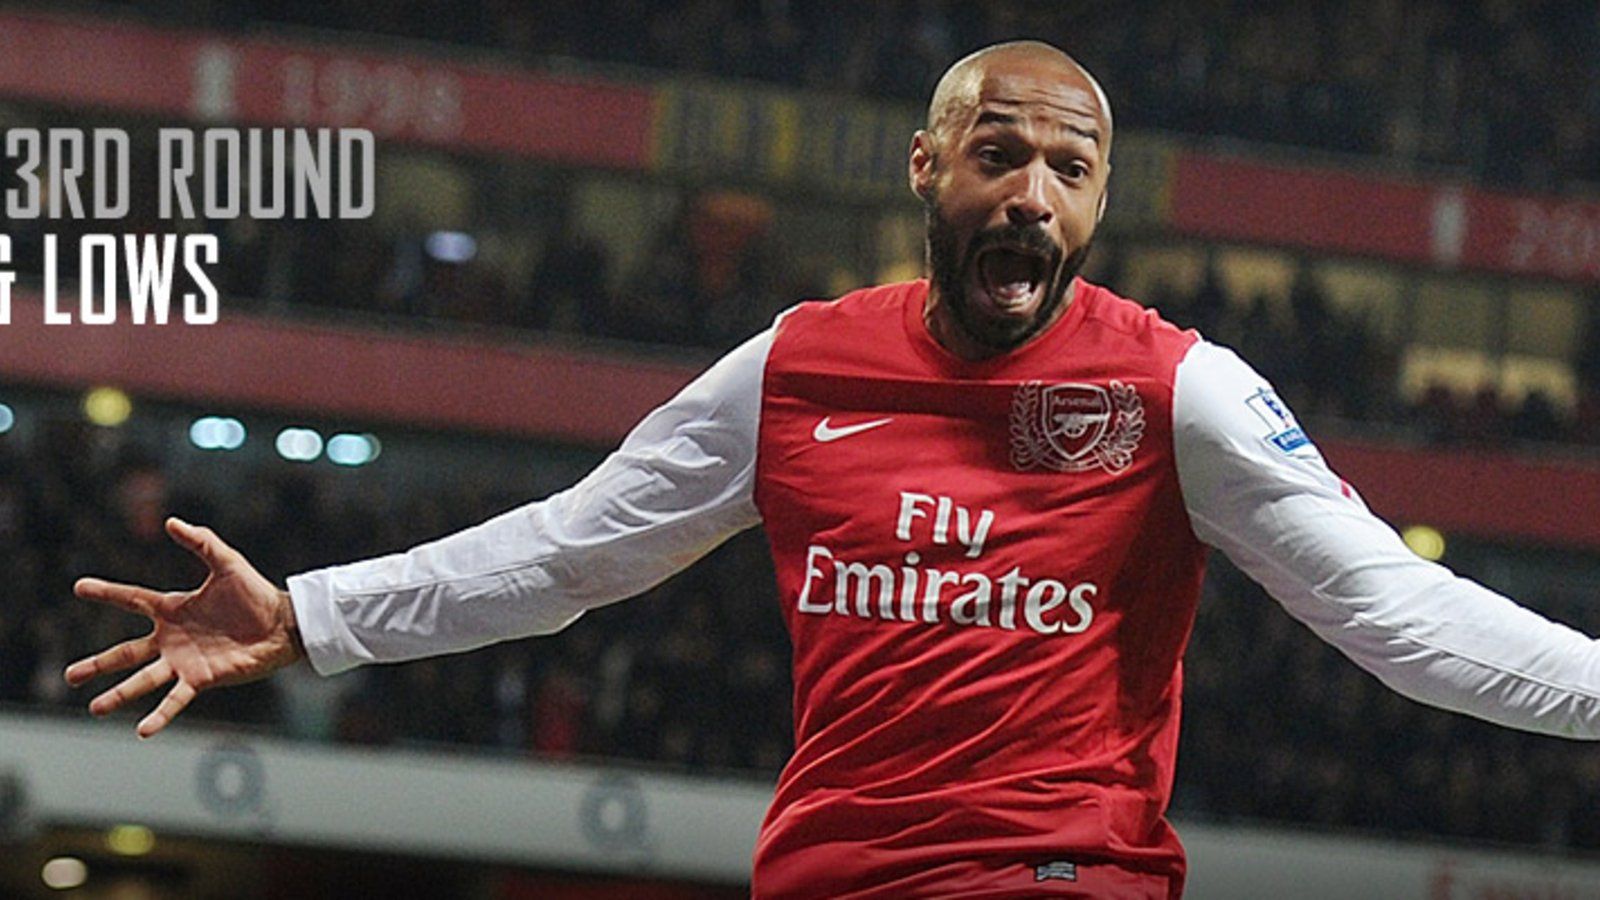 File:Thierry Henry Arsenal return 2012.jpg - Wikimedia Commons